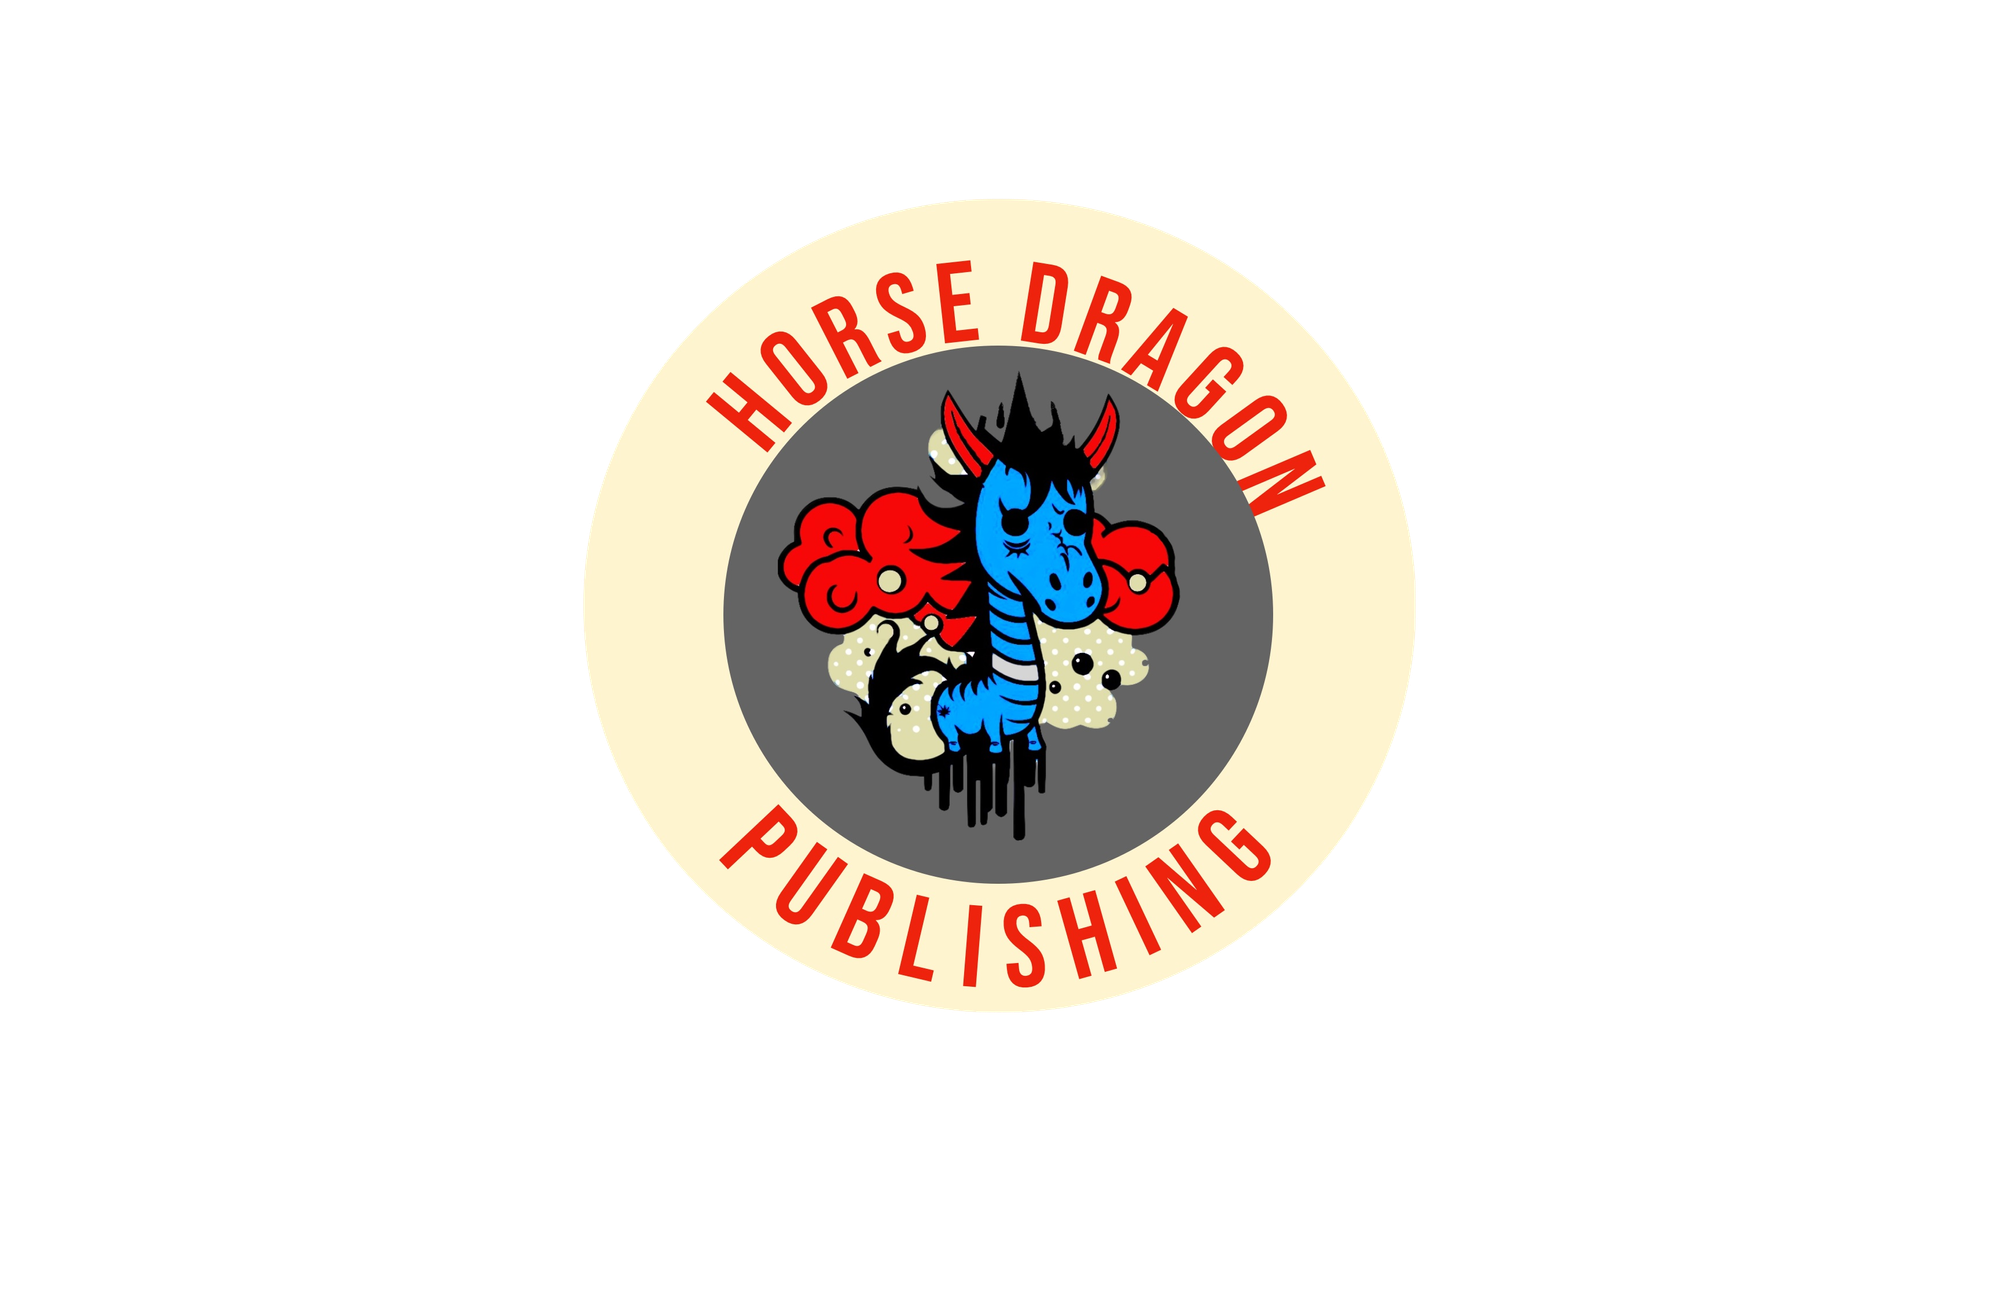 Horse Dragon Publishing